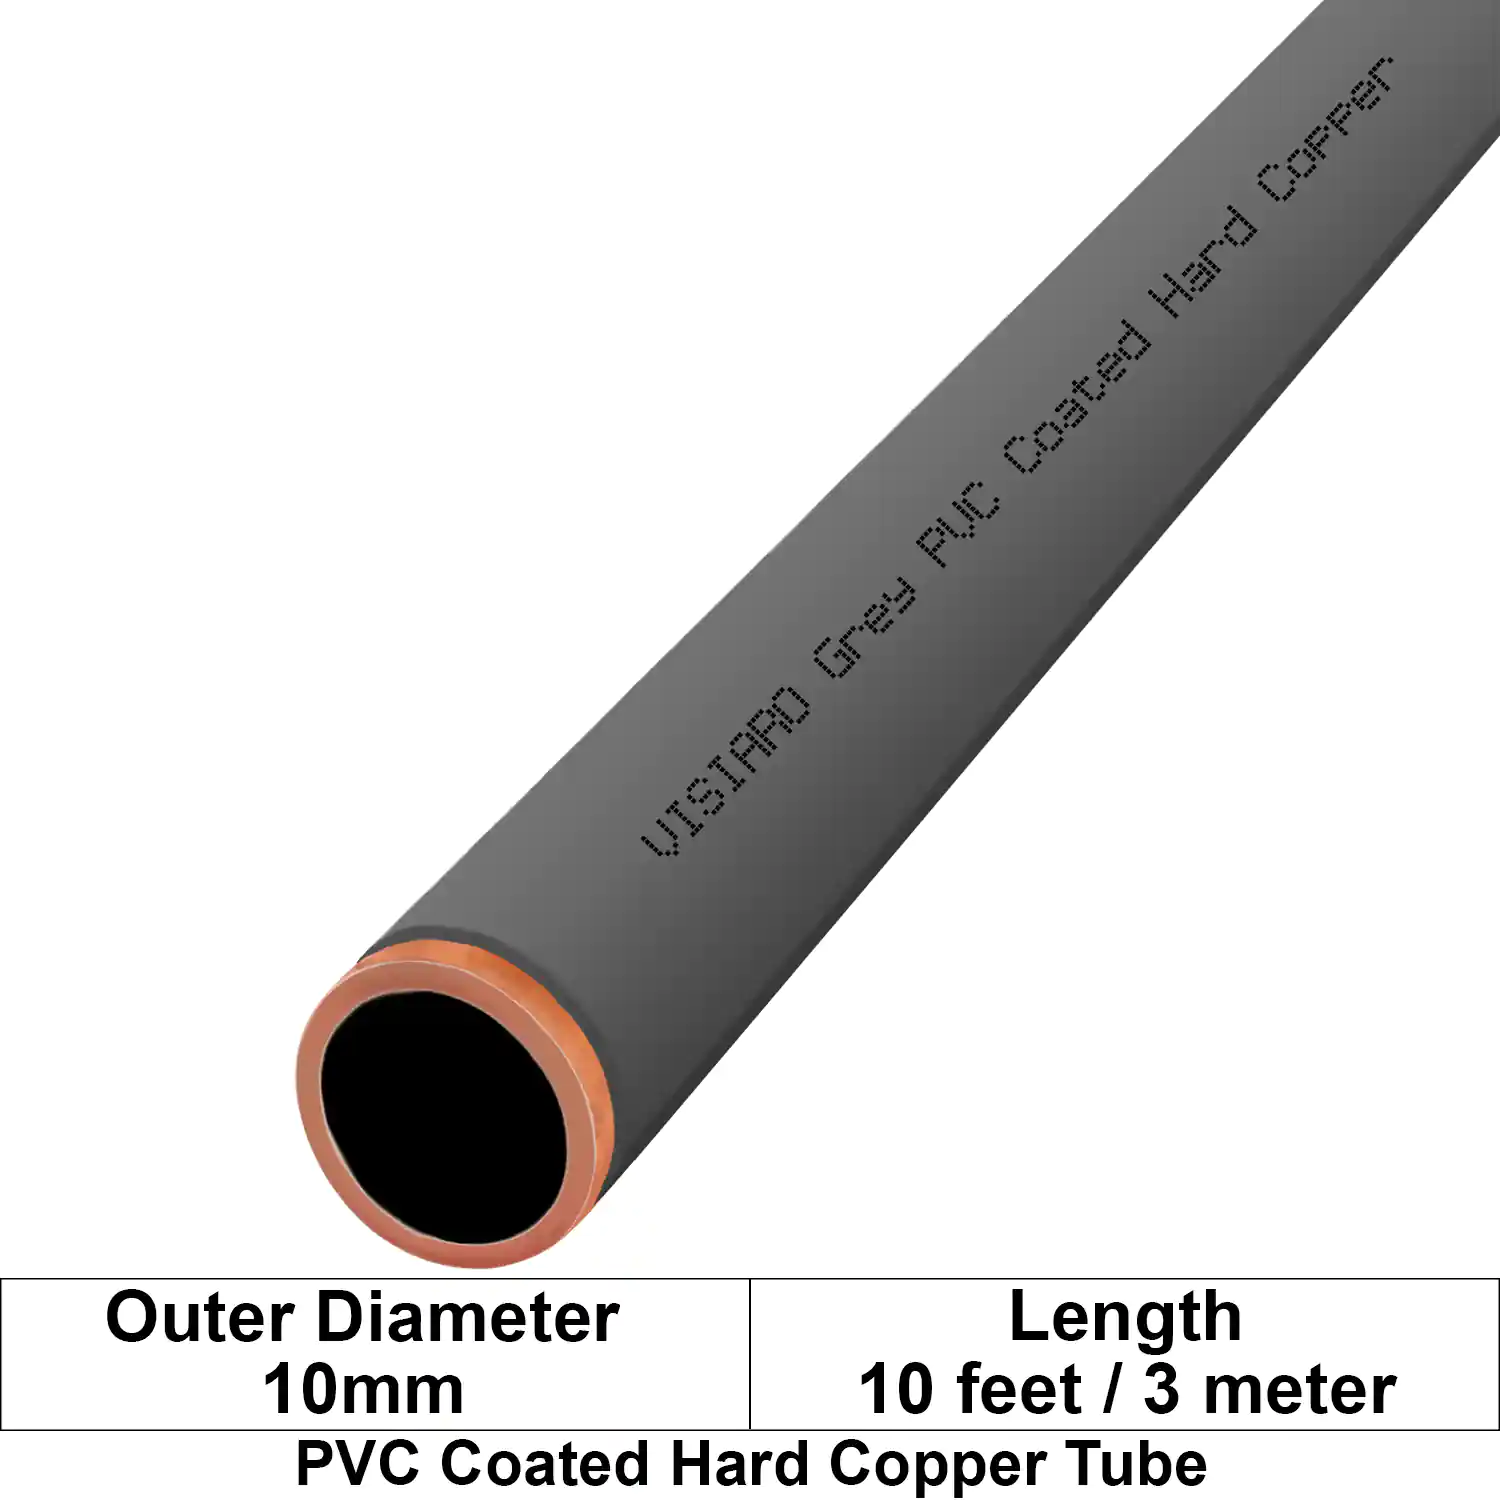 Visiaro Grey PVC Coated Hard Copper Tube 10ft long Outer Diameter - 10 mm